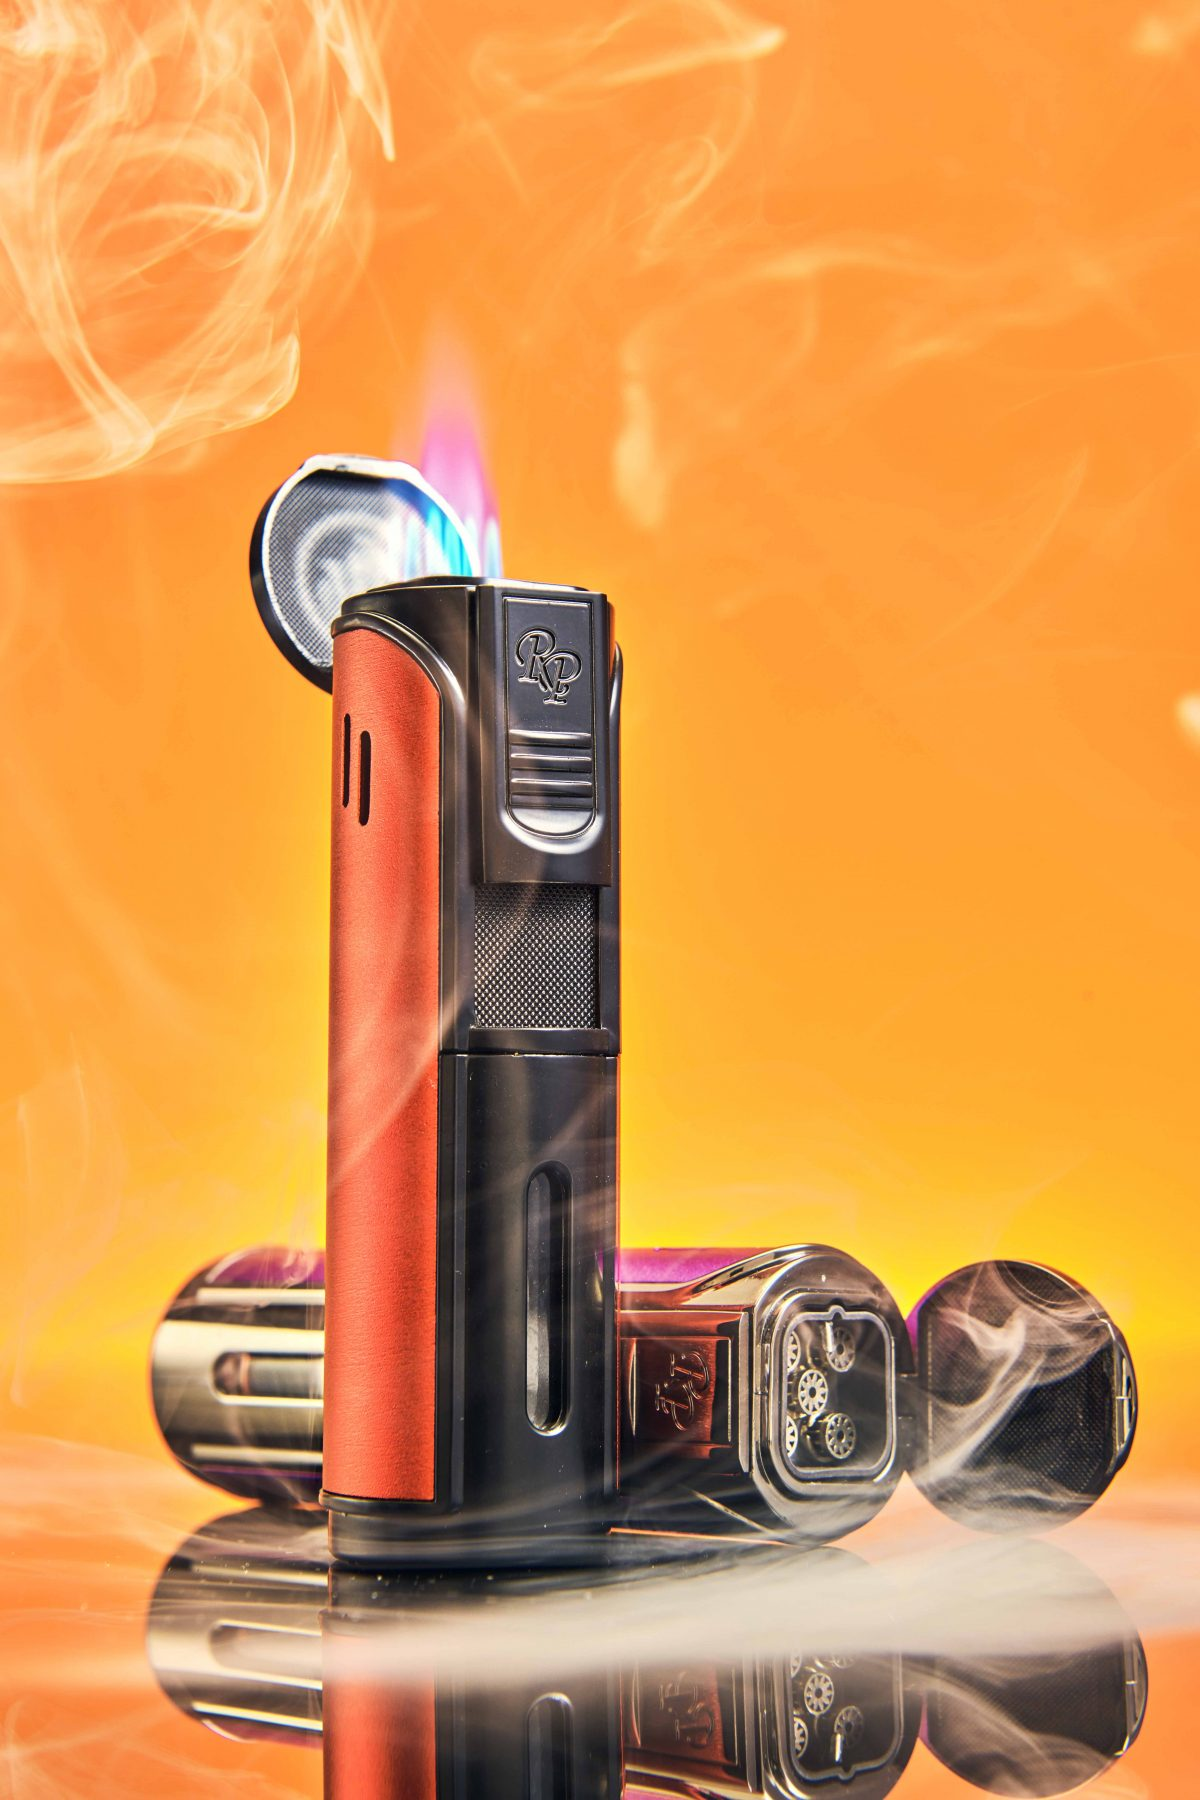 A compact and portable cigar lighter